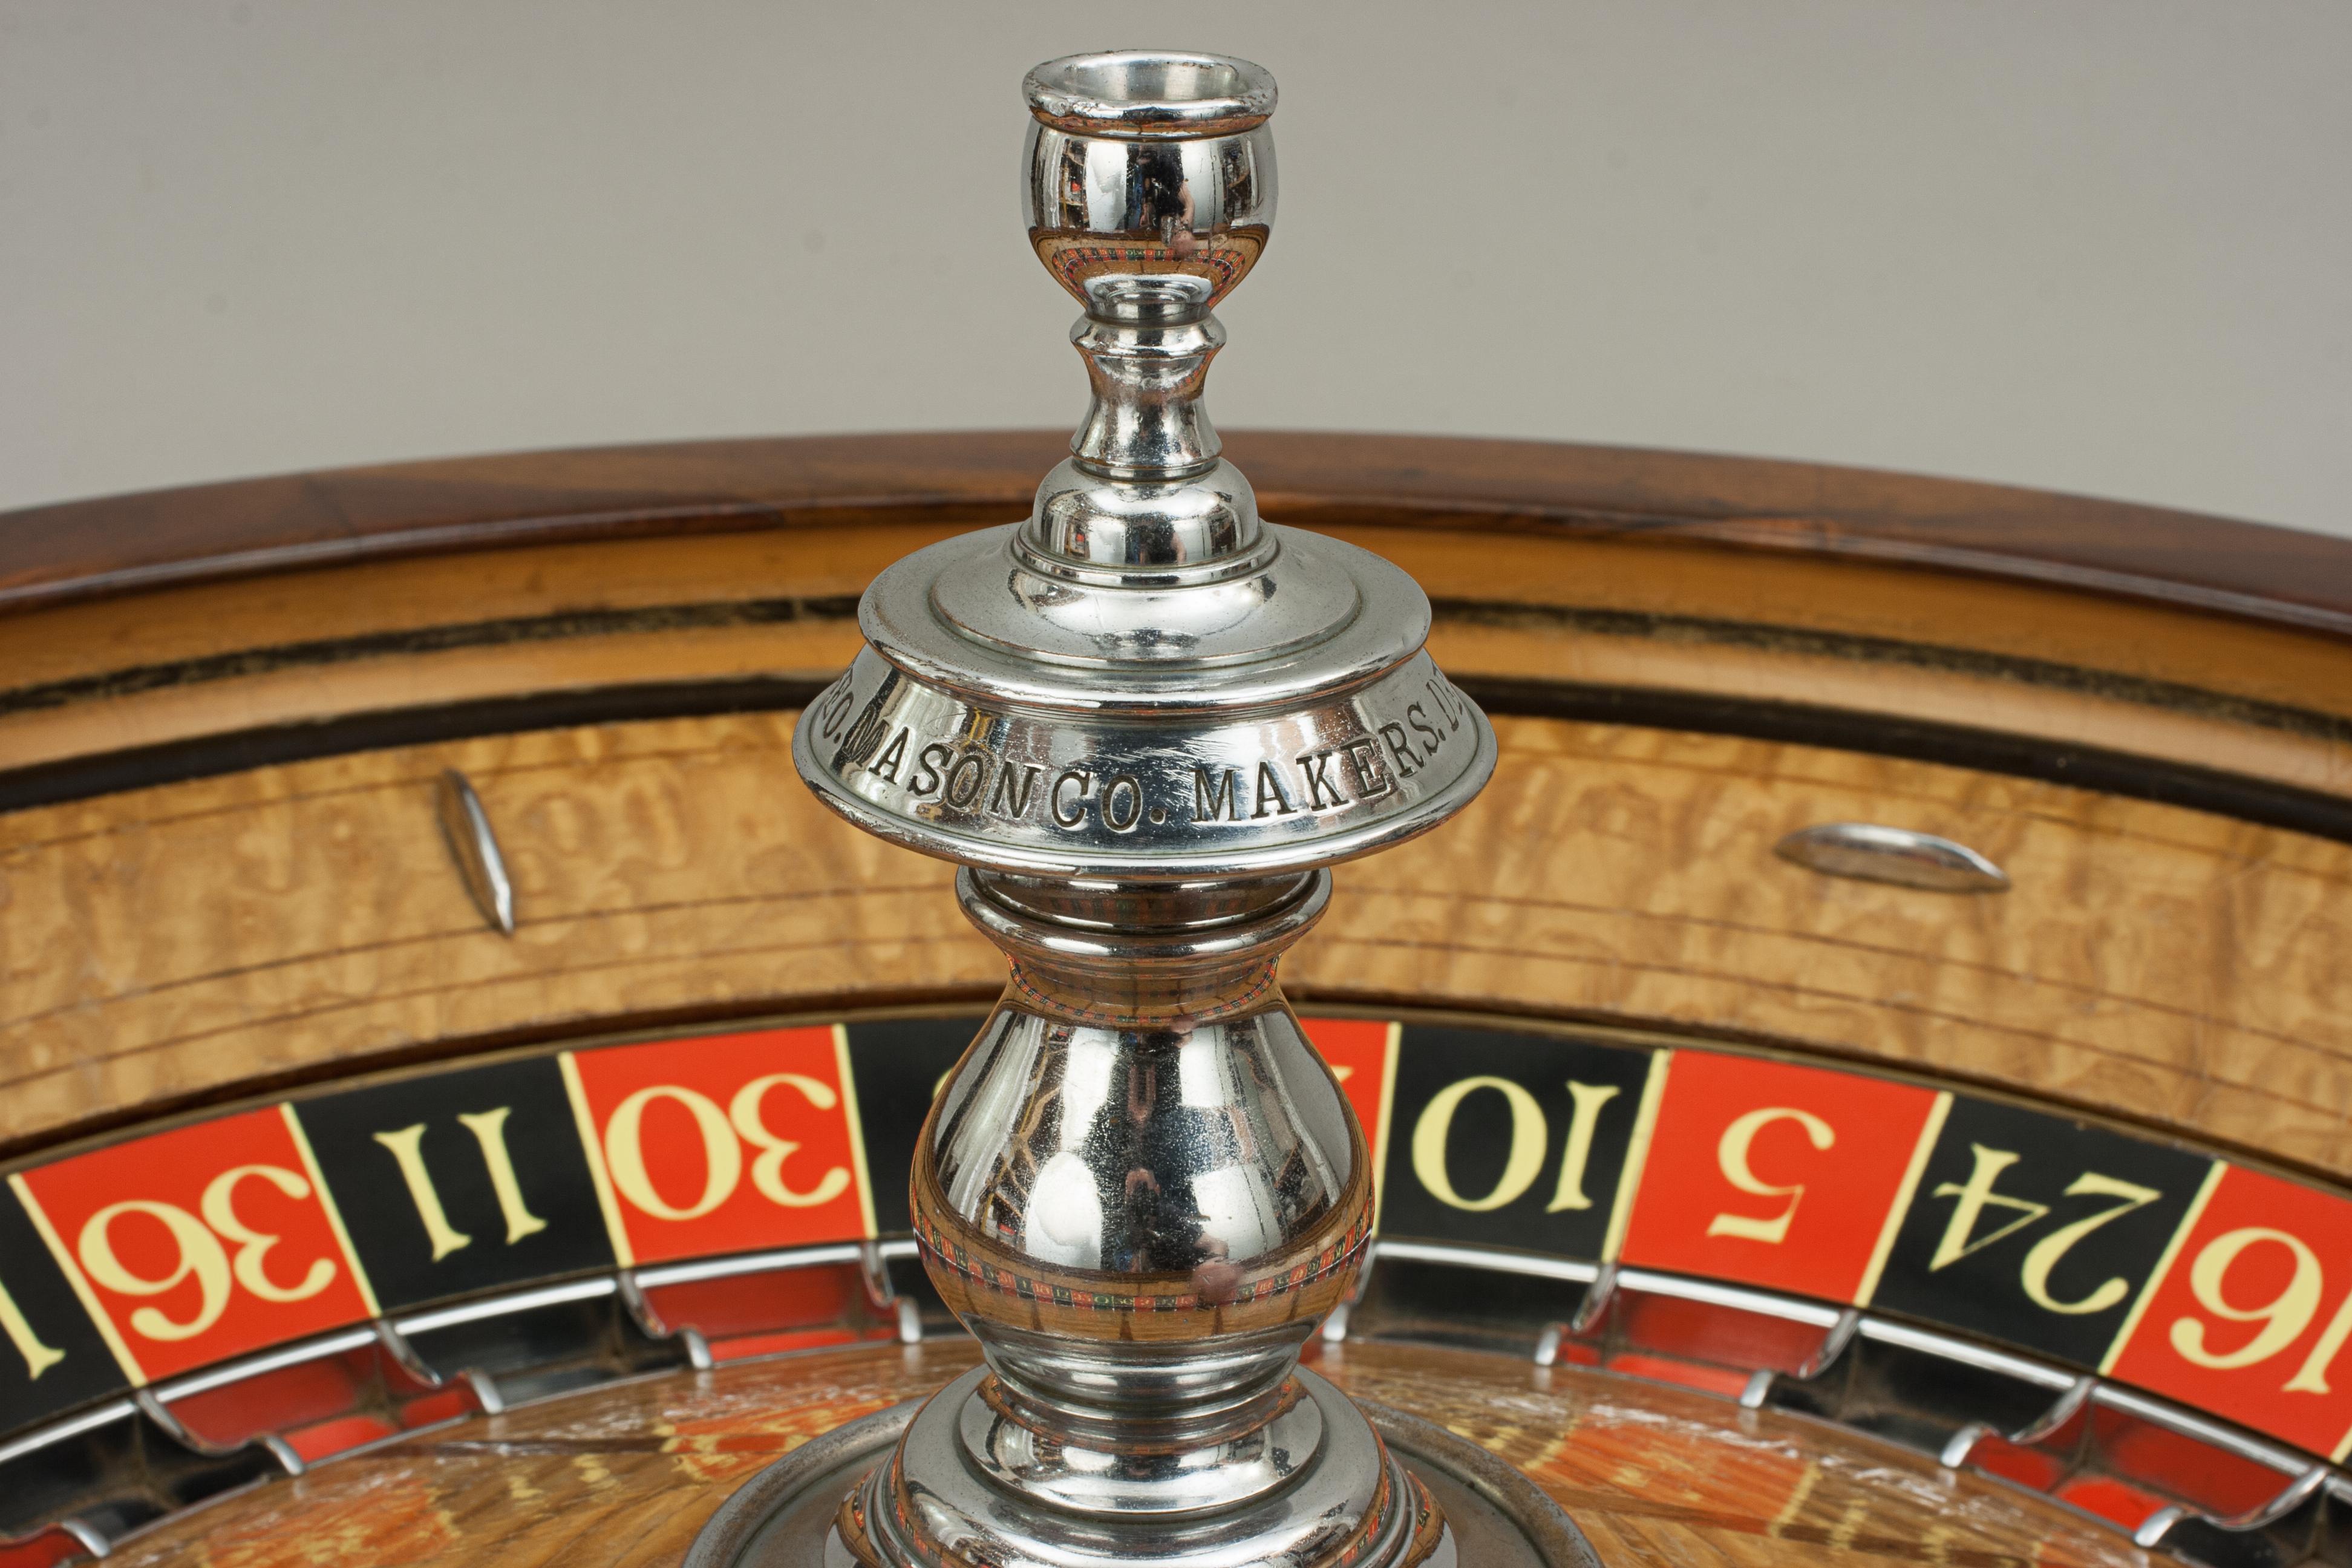 Antique Casino Roulette Wheel, George Mason Co. Denver Colorado 11